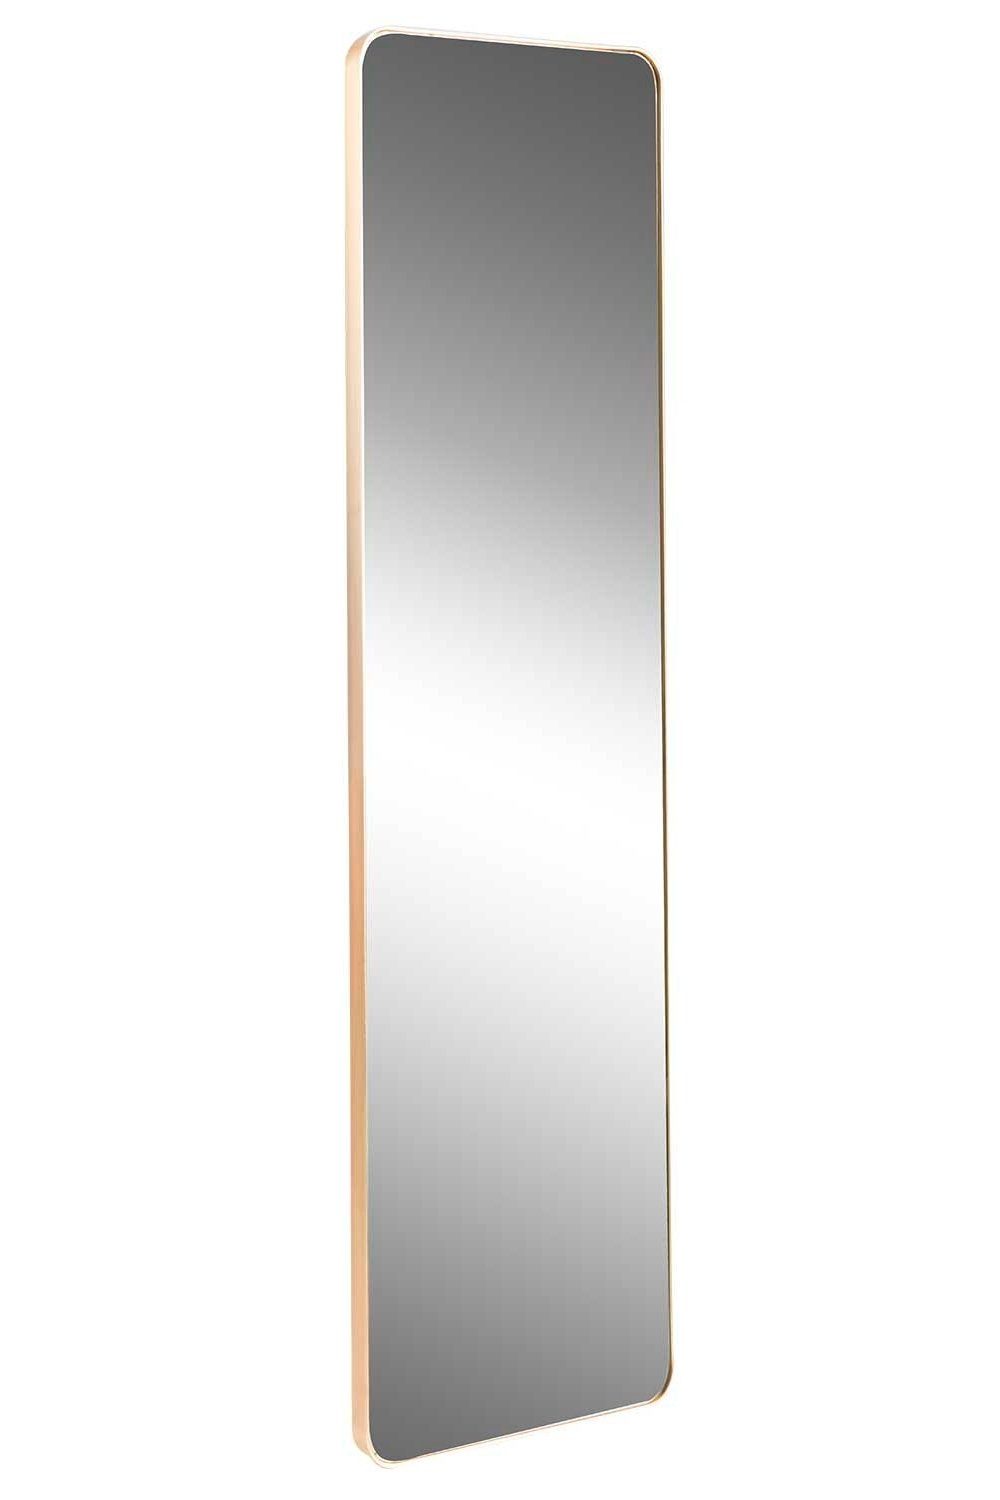 Home4You Spiegel TAINA, B 30 x H 150 cm, Rahmen in Goldfarben, Metall, lackierte Rahmenoberfläche